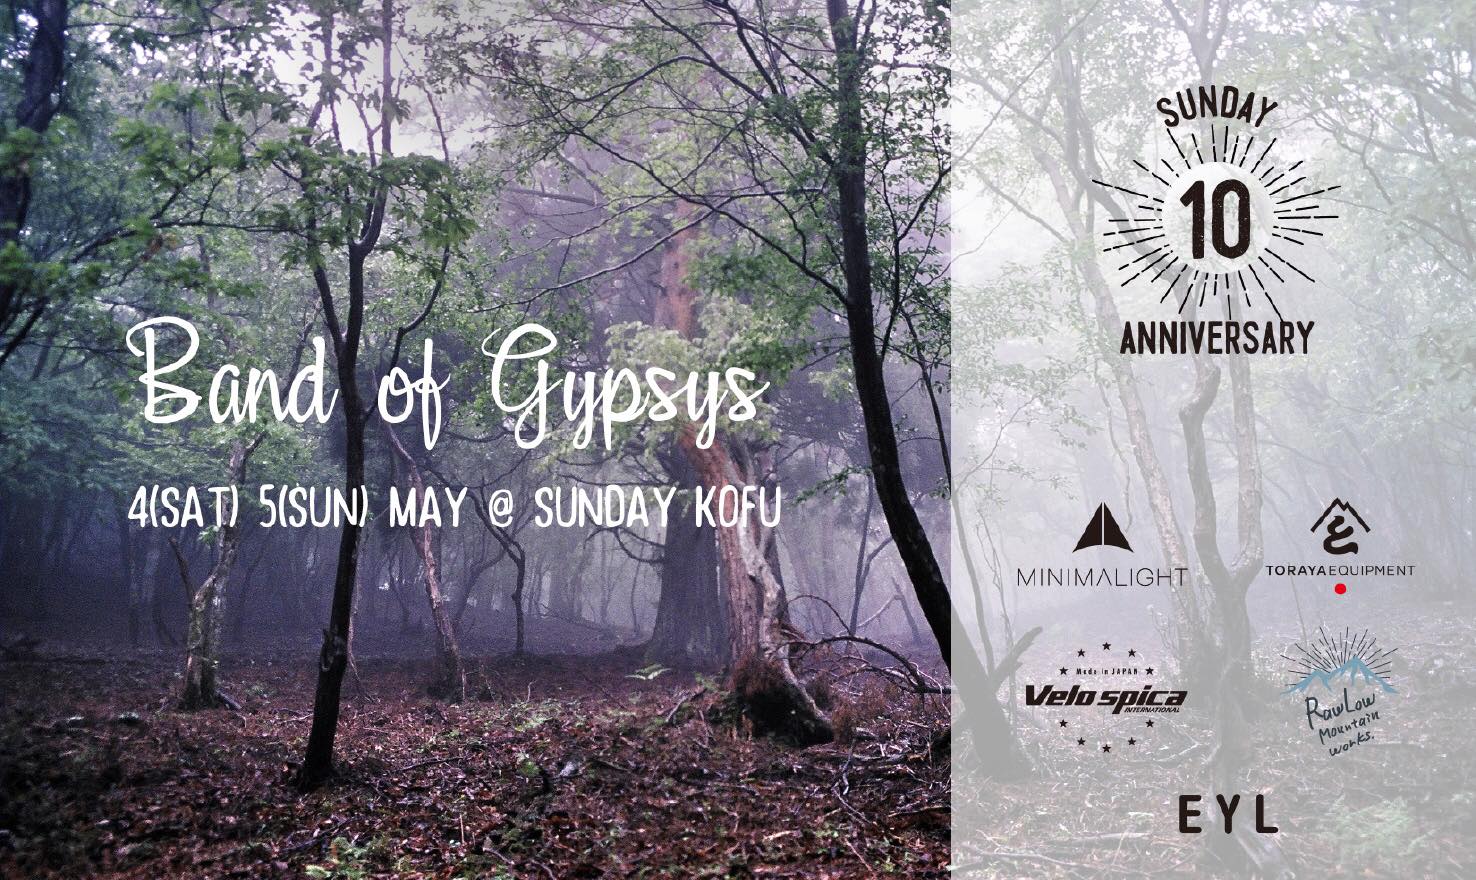 『Band of Gypsys』  5/4(sat),5(sun)  @甲府 SUNDAY